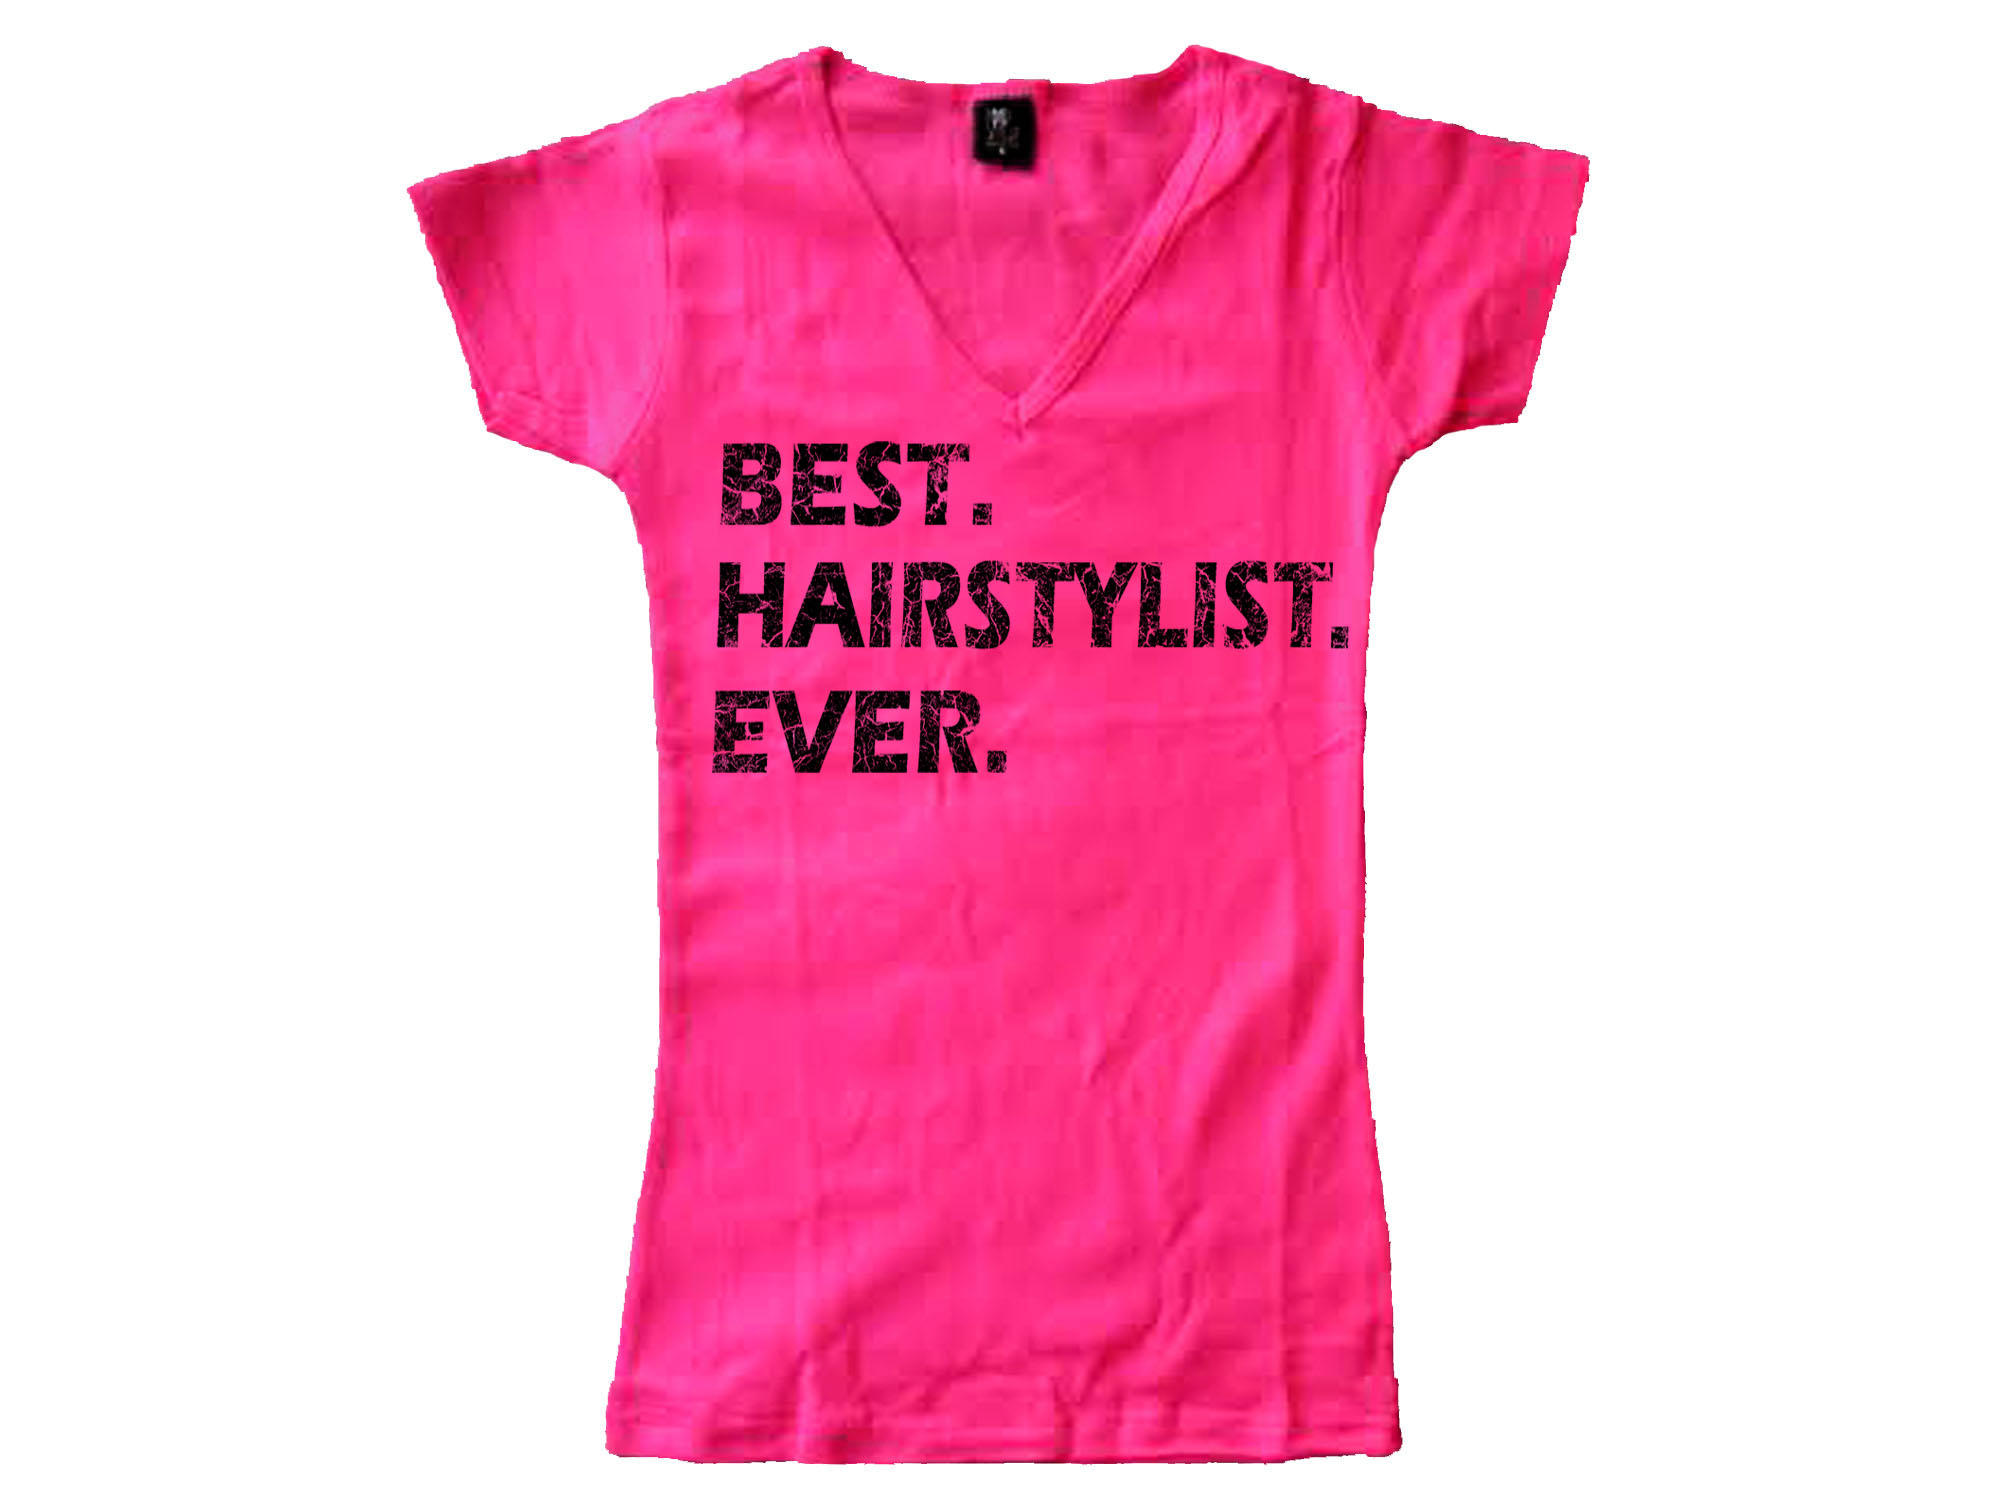 Best hairstylist ever women v neck pink top shirt